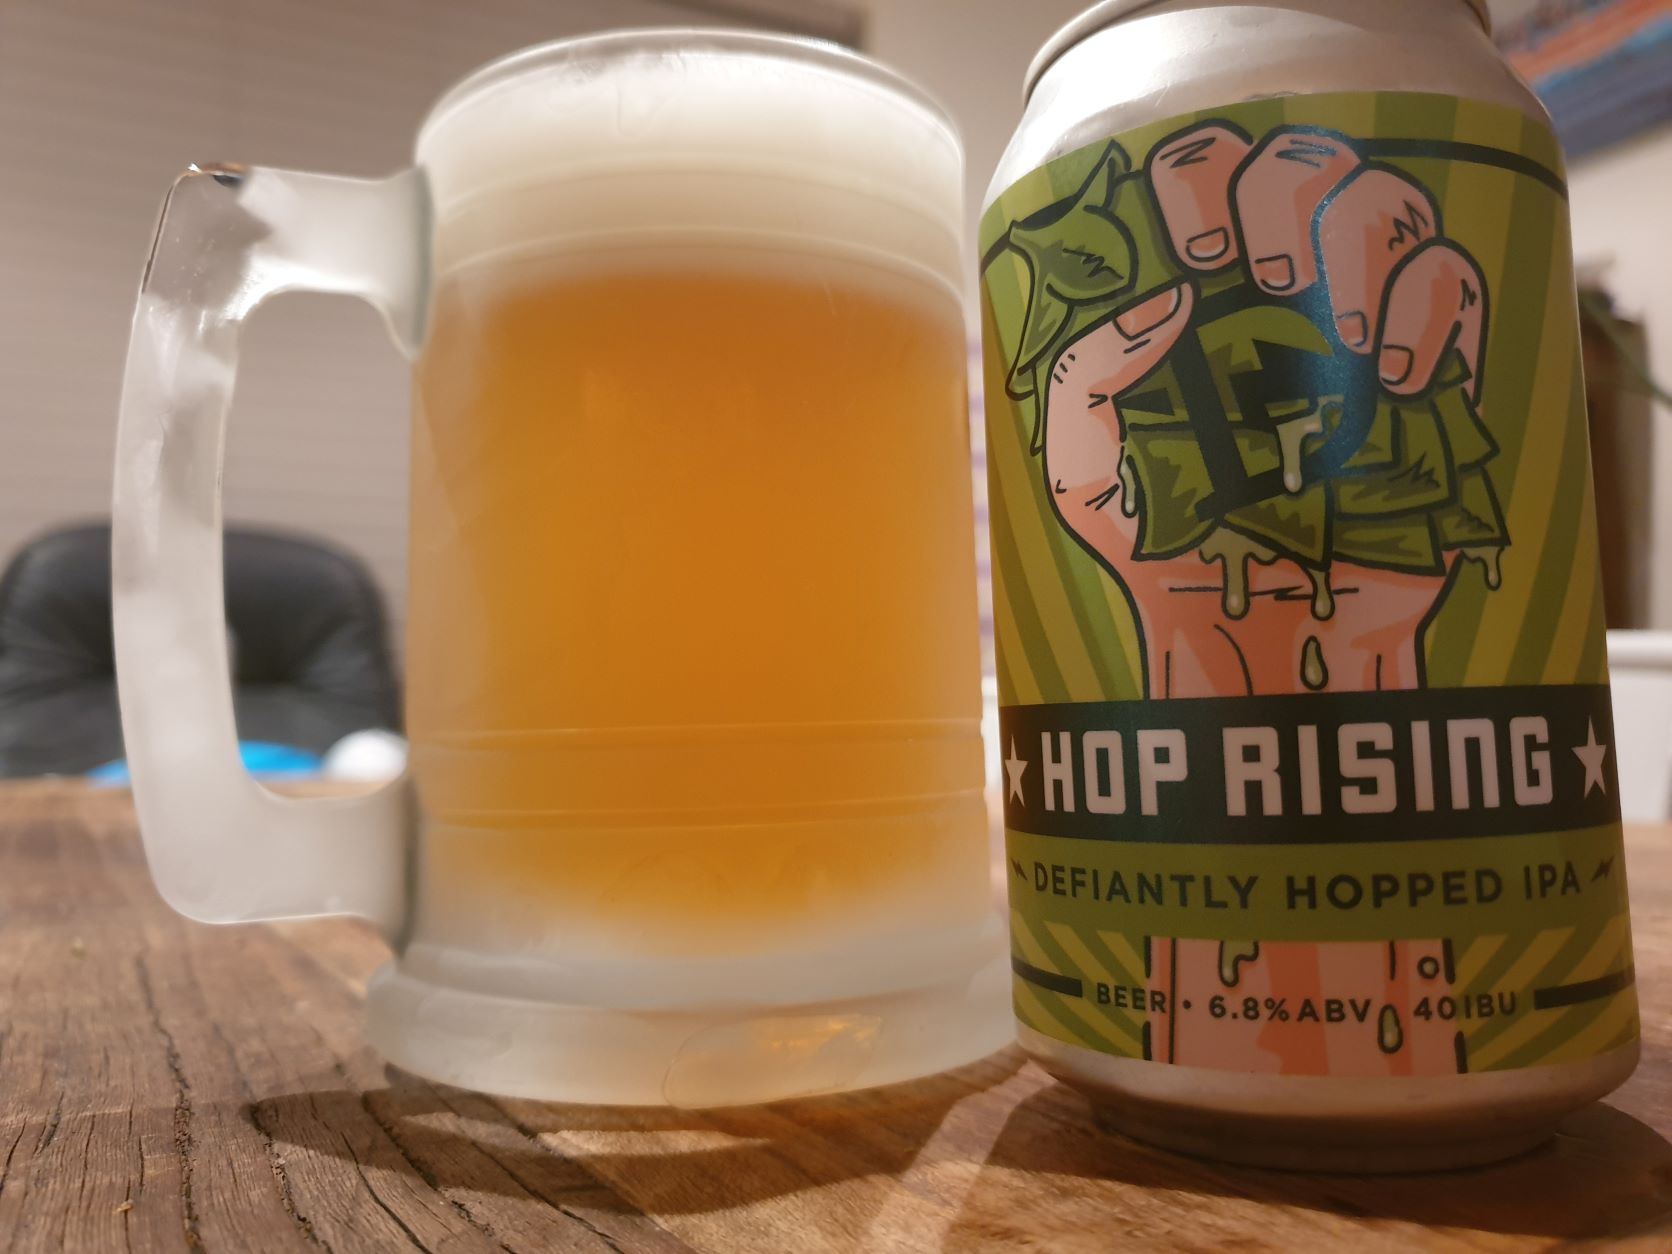 Hop Rising IPA by Dainton Beer